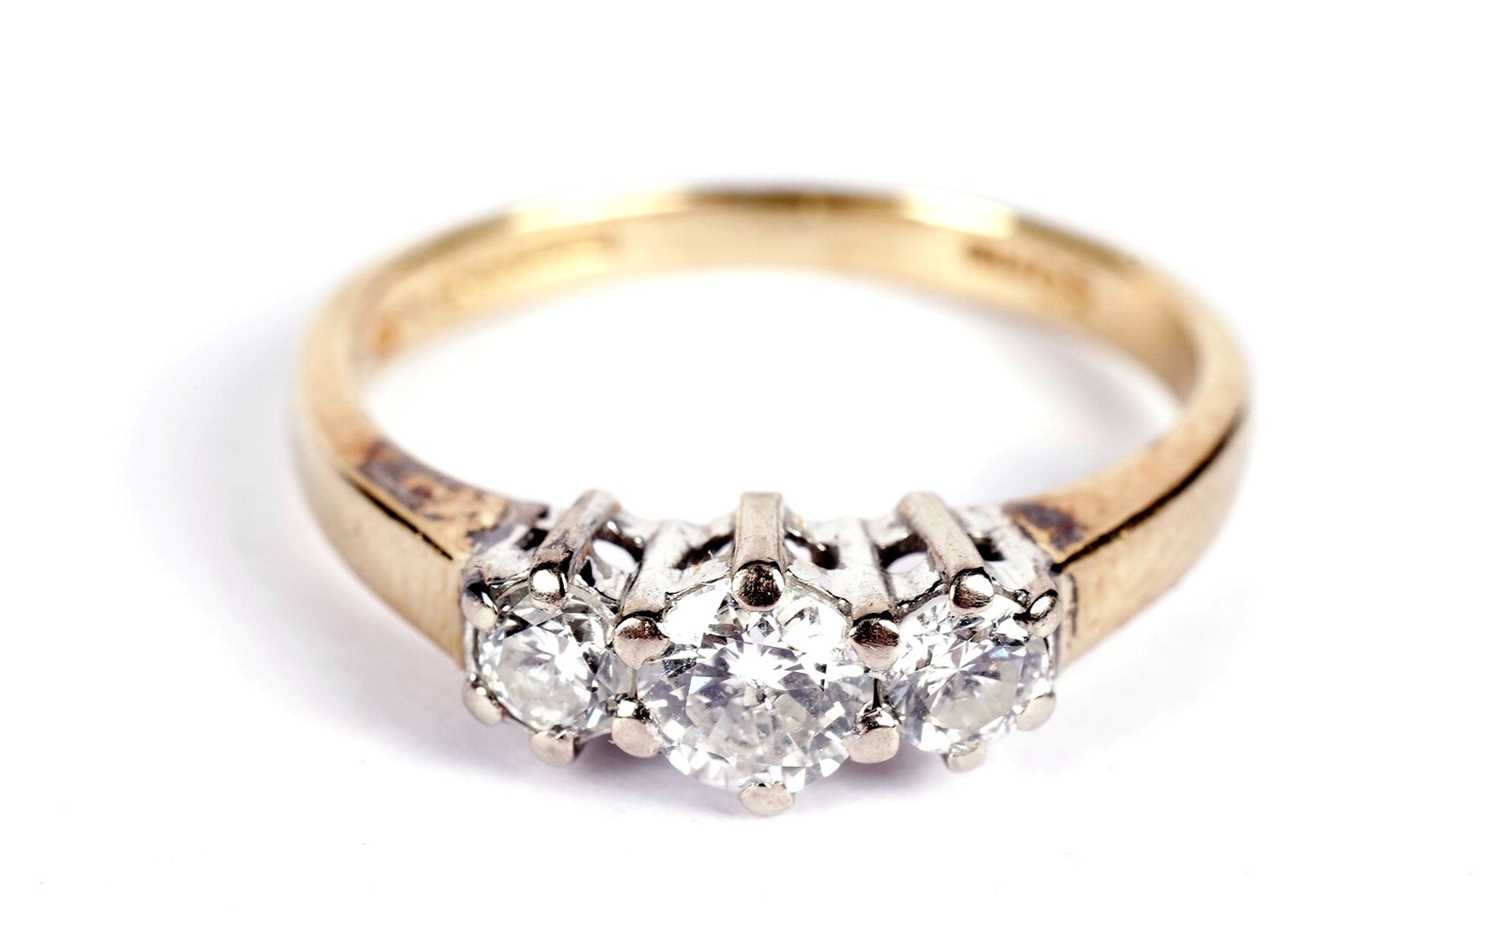 A three stone diamond ring - Image 2 of 4